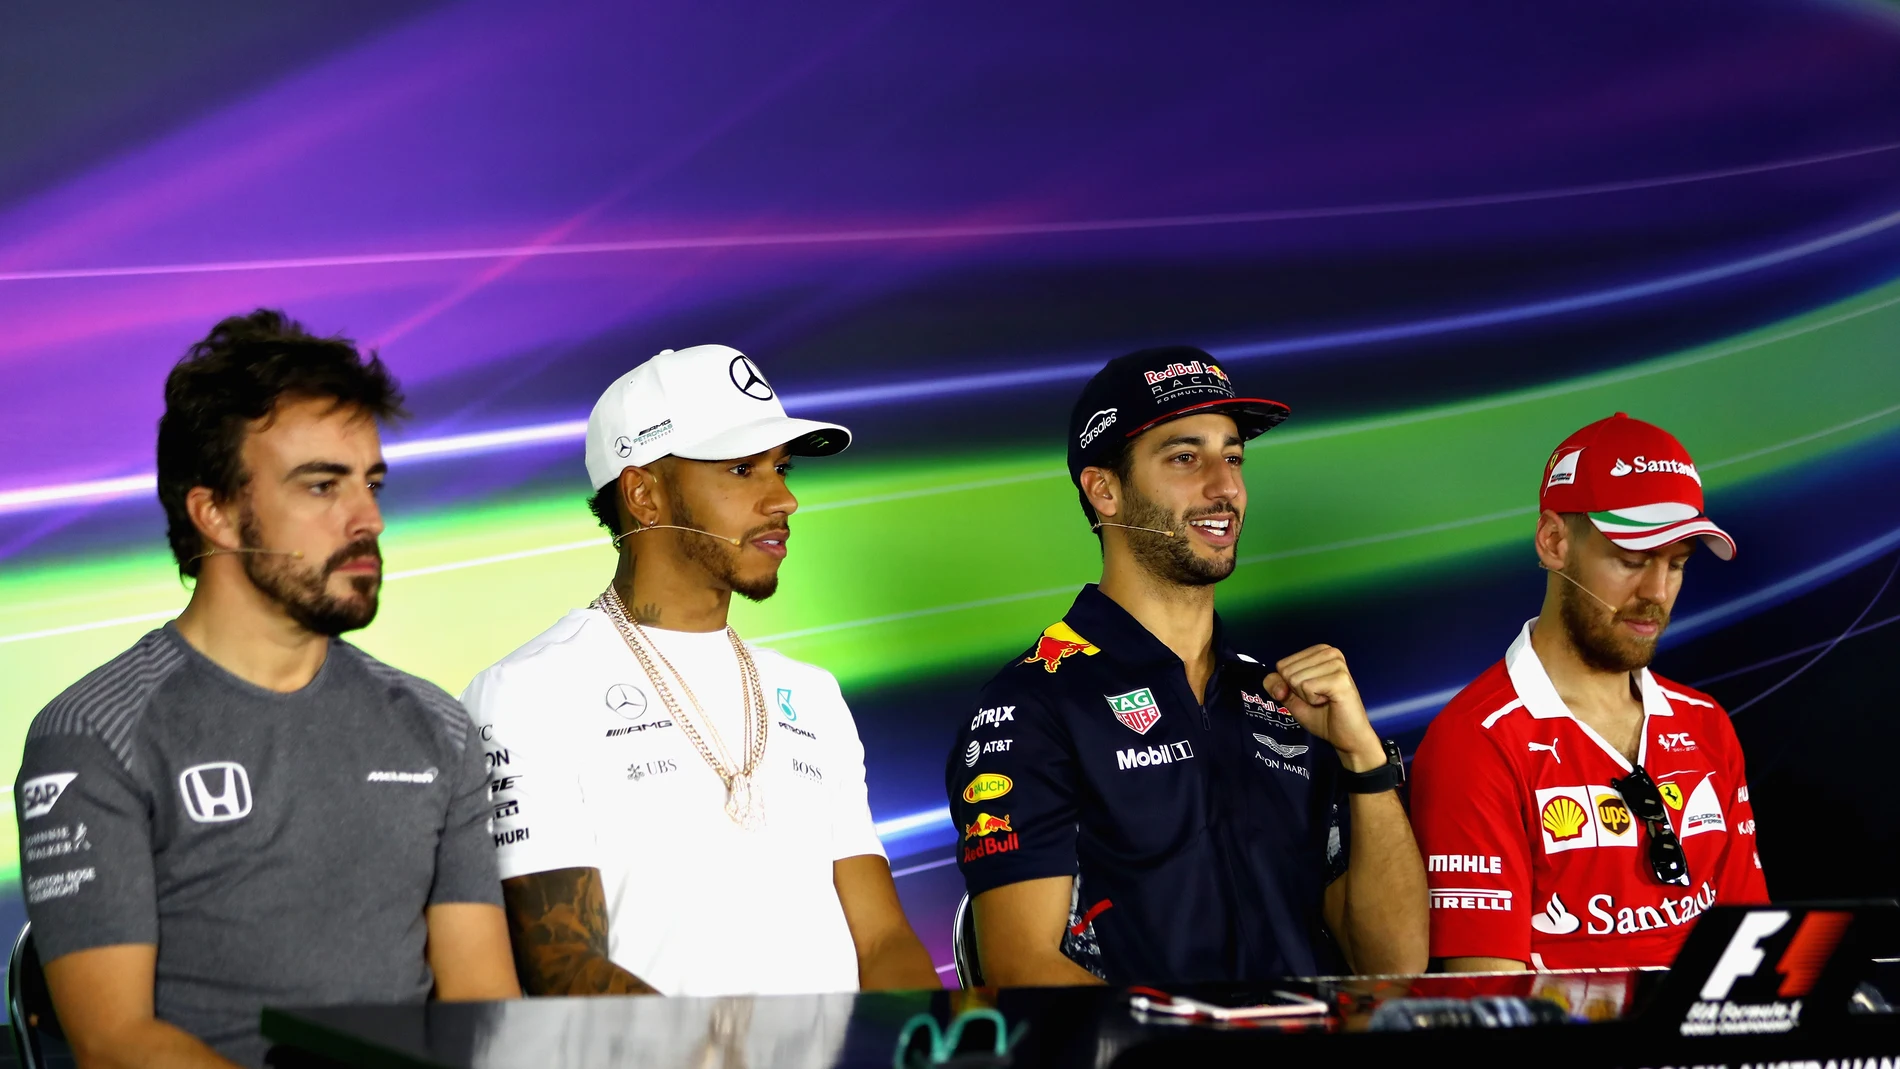 Alonso, Hamilton, Ricciardo y Vettel, en rueda de prensa en Albert Park